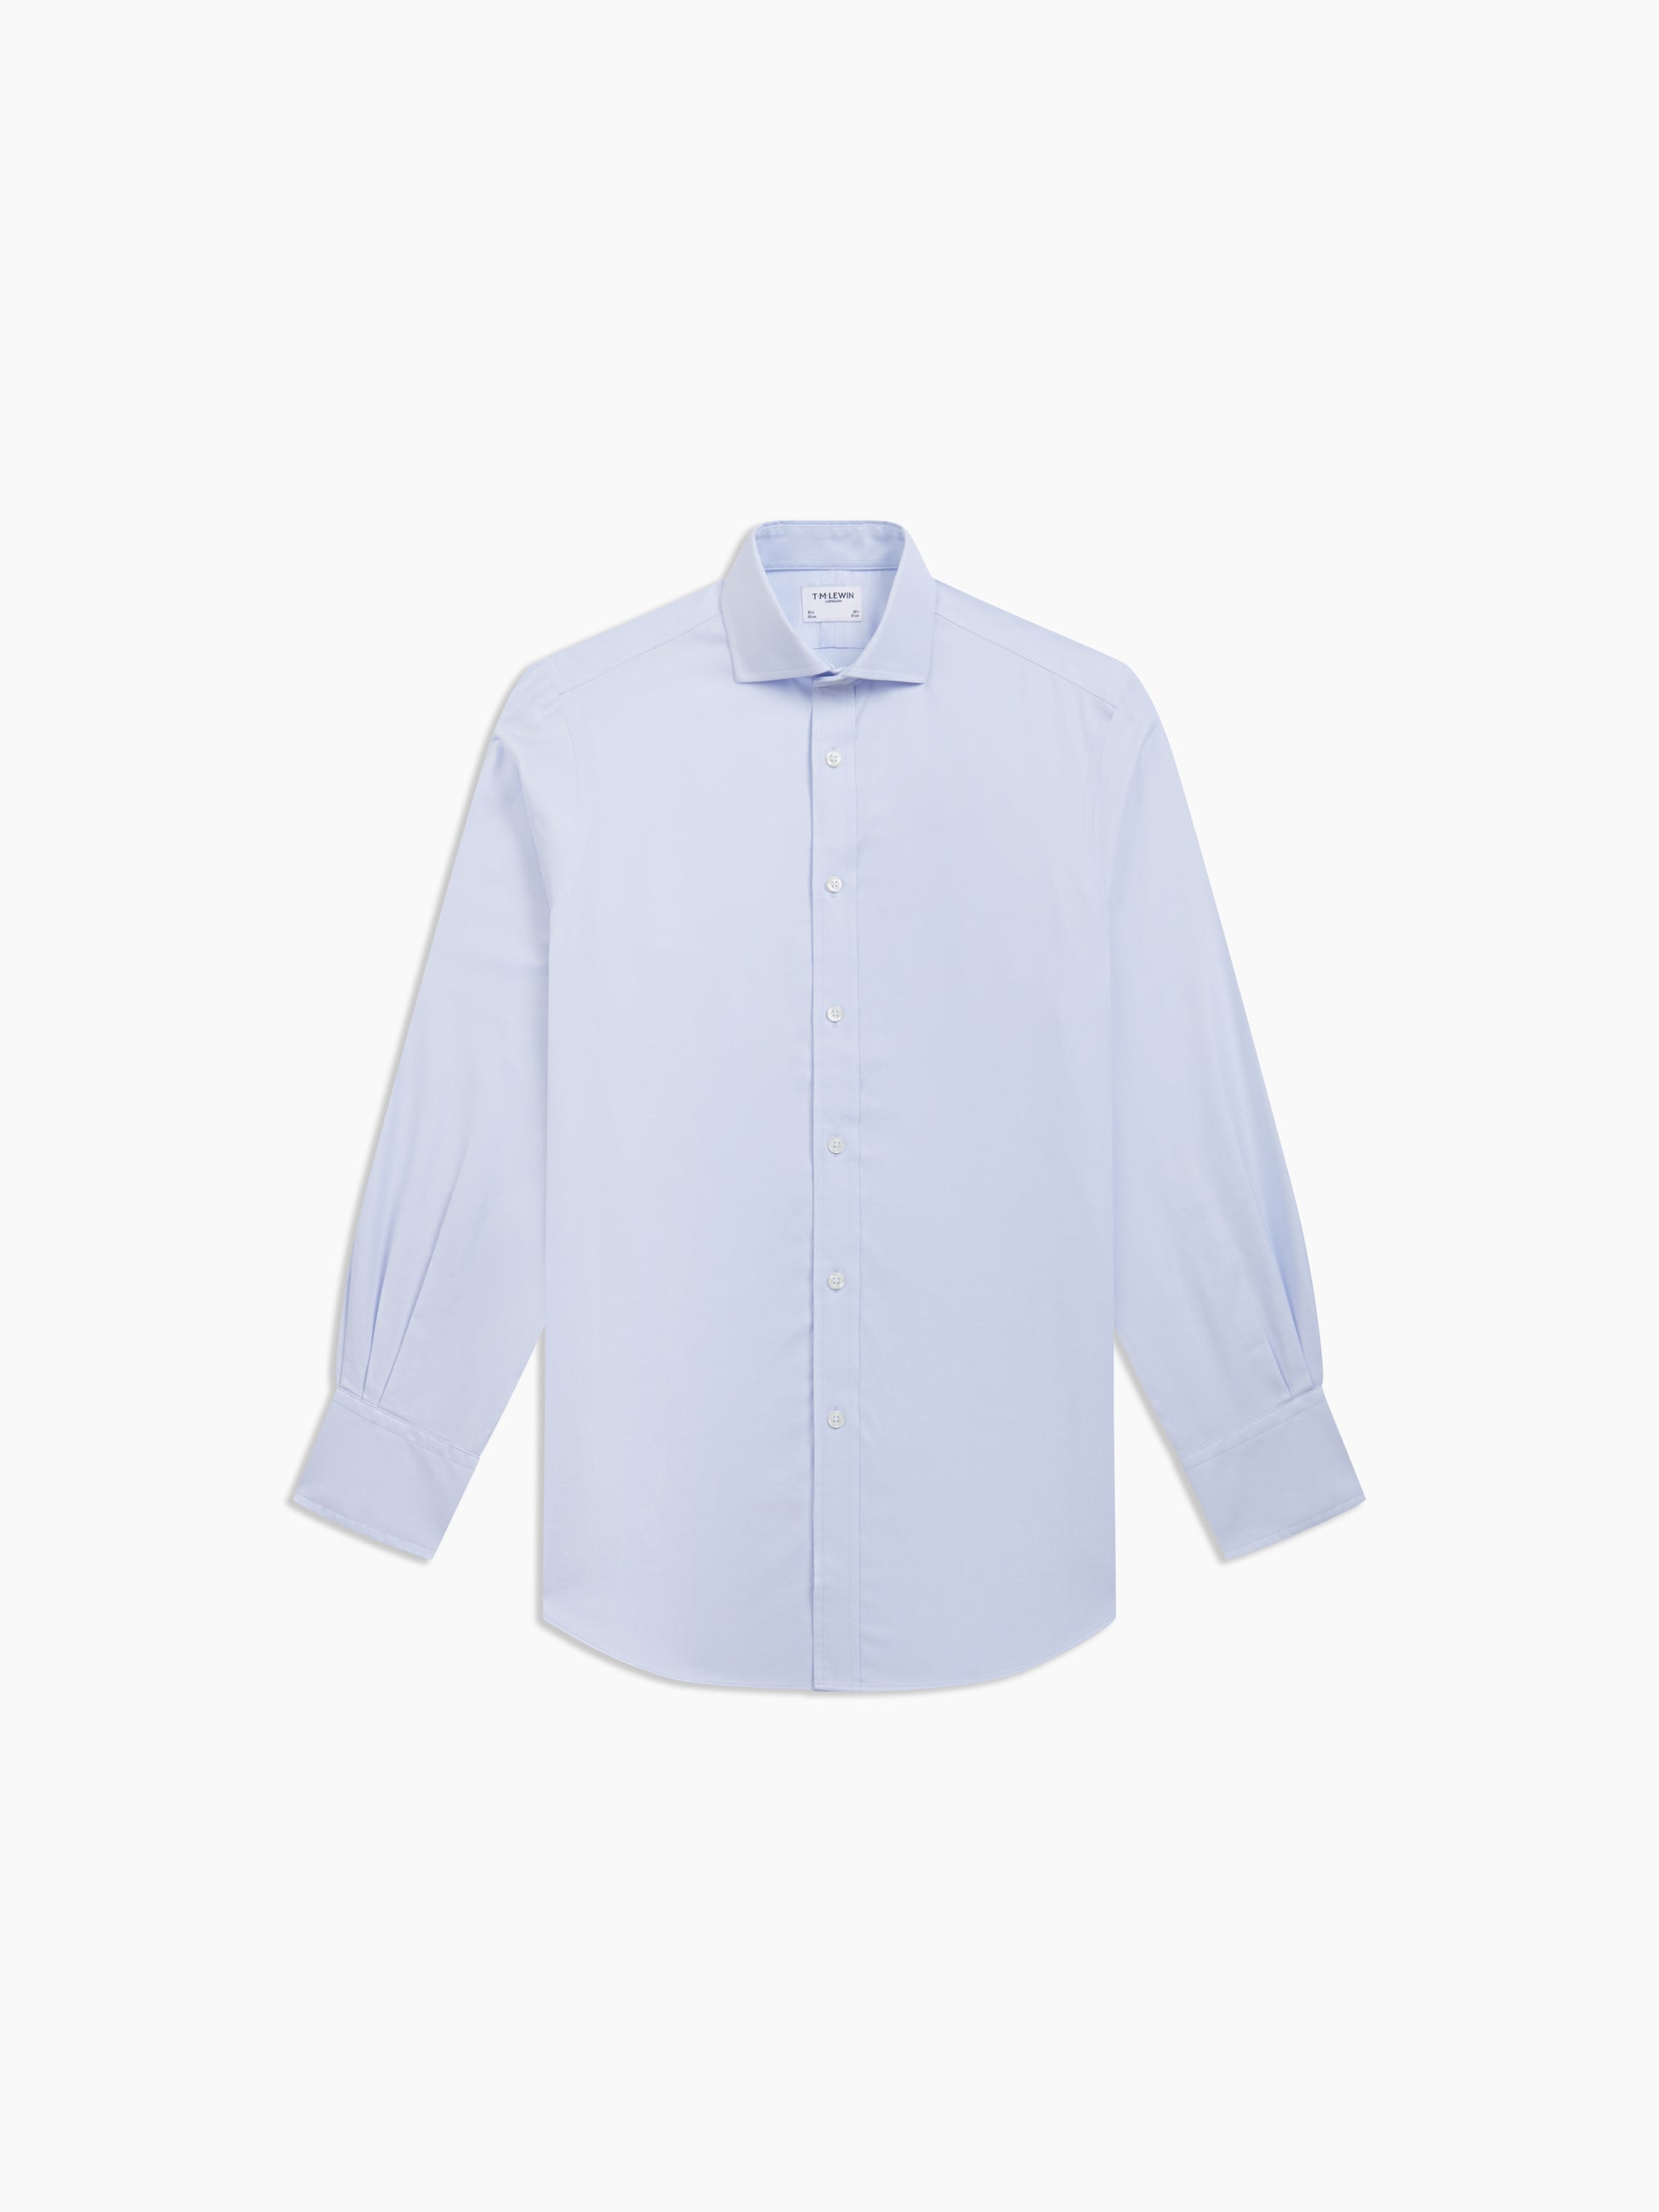 Image 2 of Non-Iron Sky Blue Plain Oxford Regular Fit Single Cuff Classic Collar Shirt